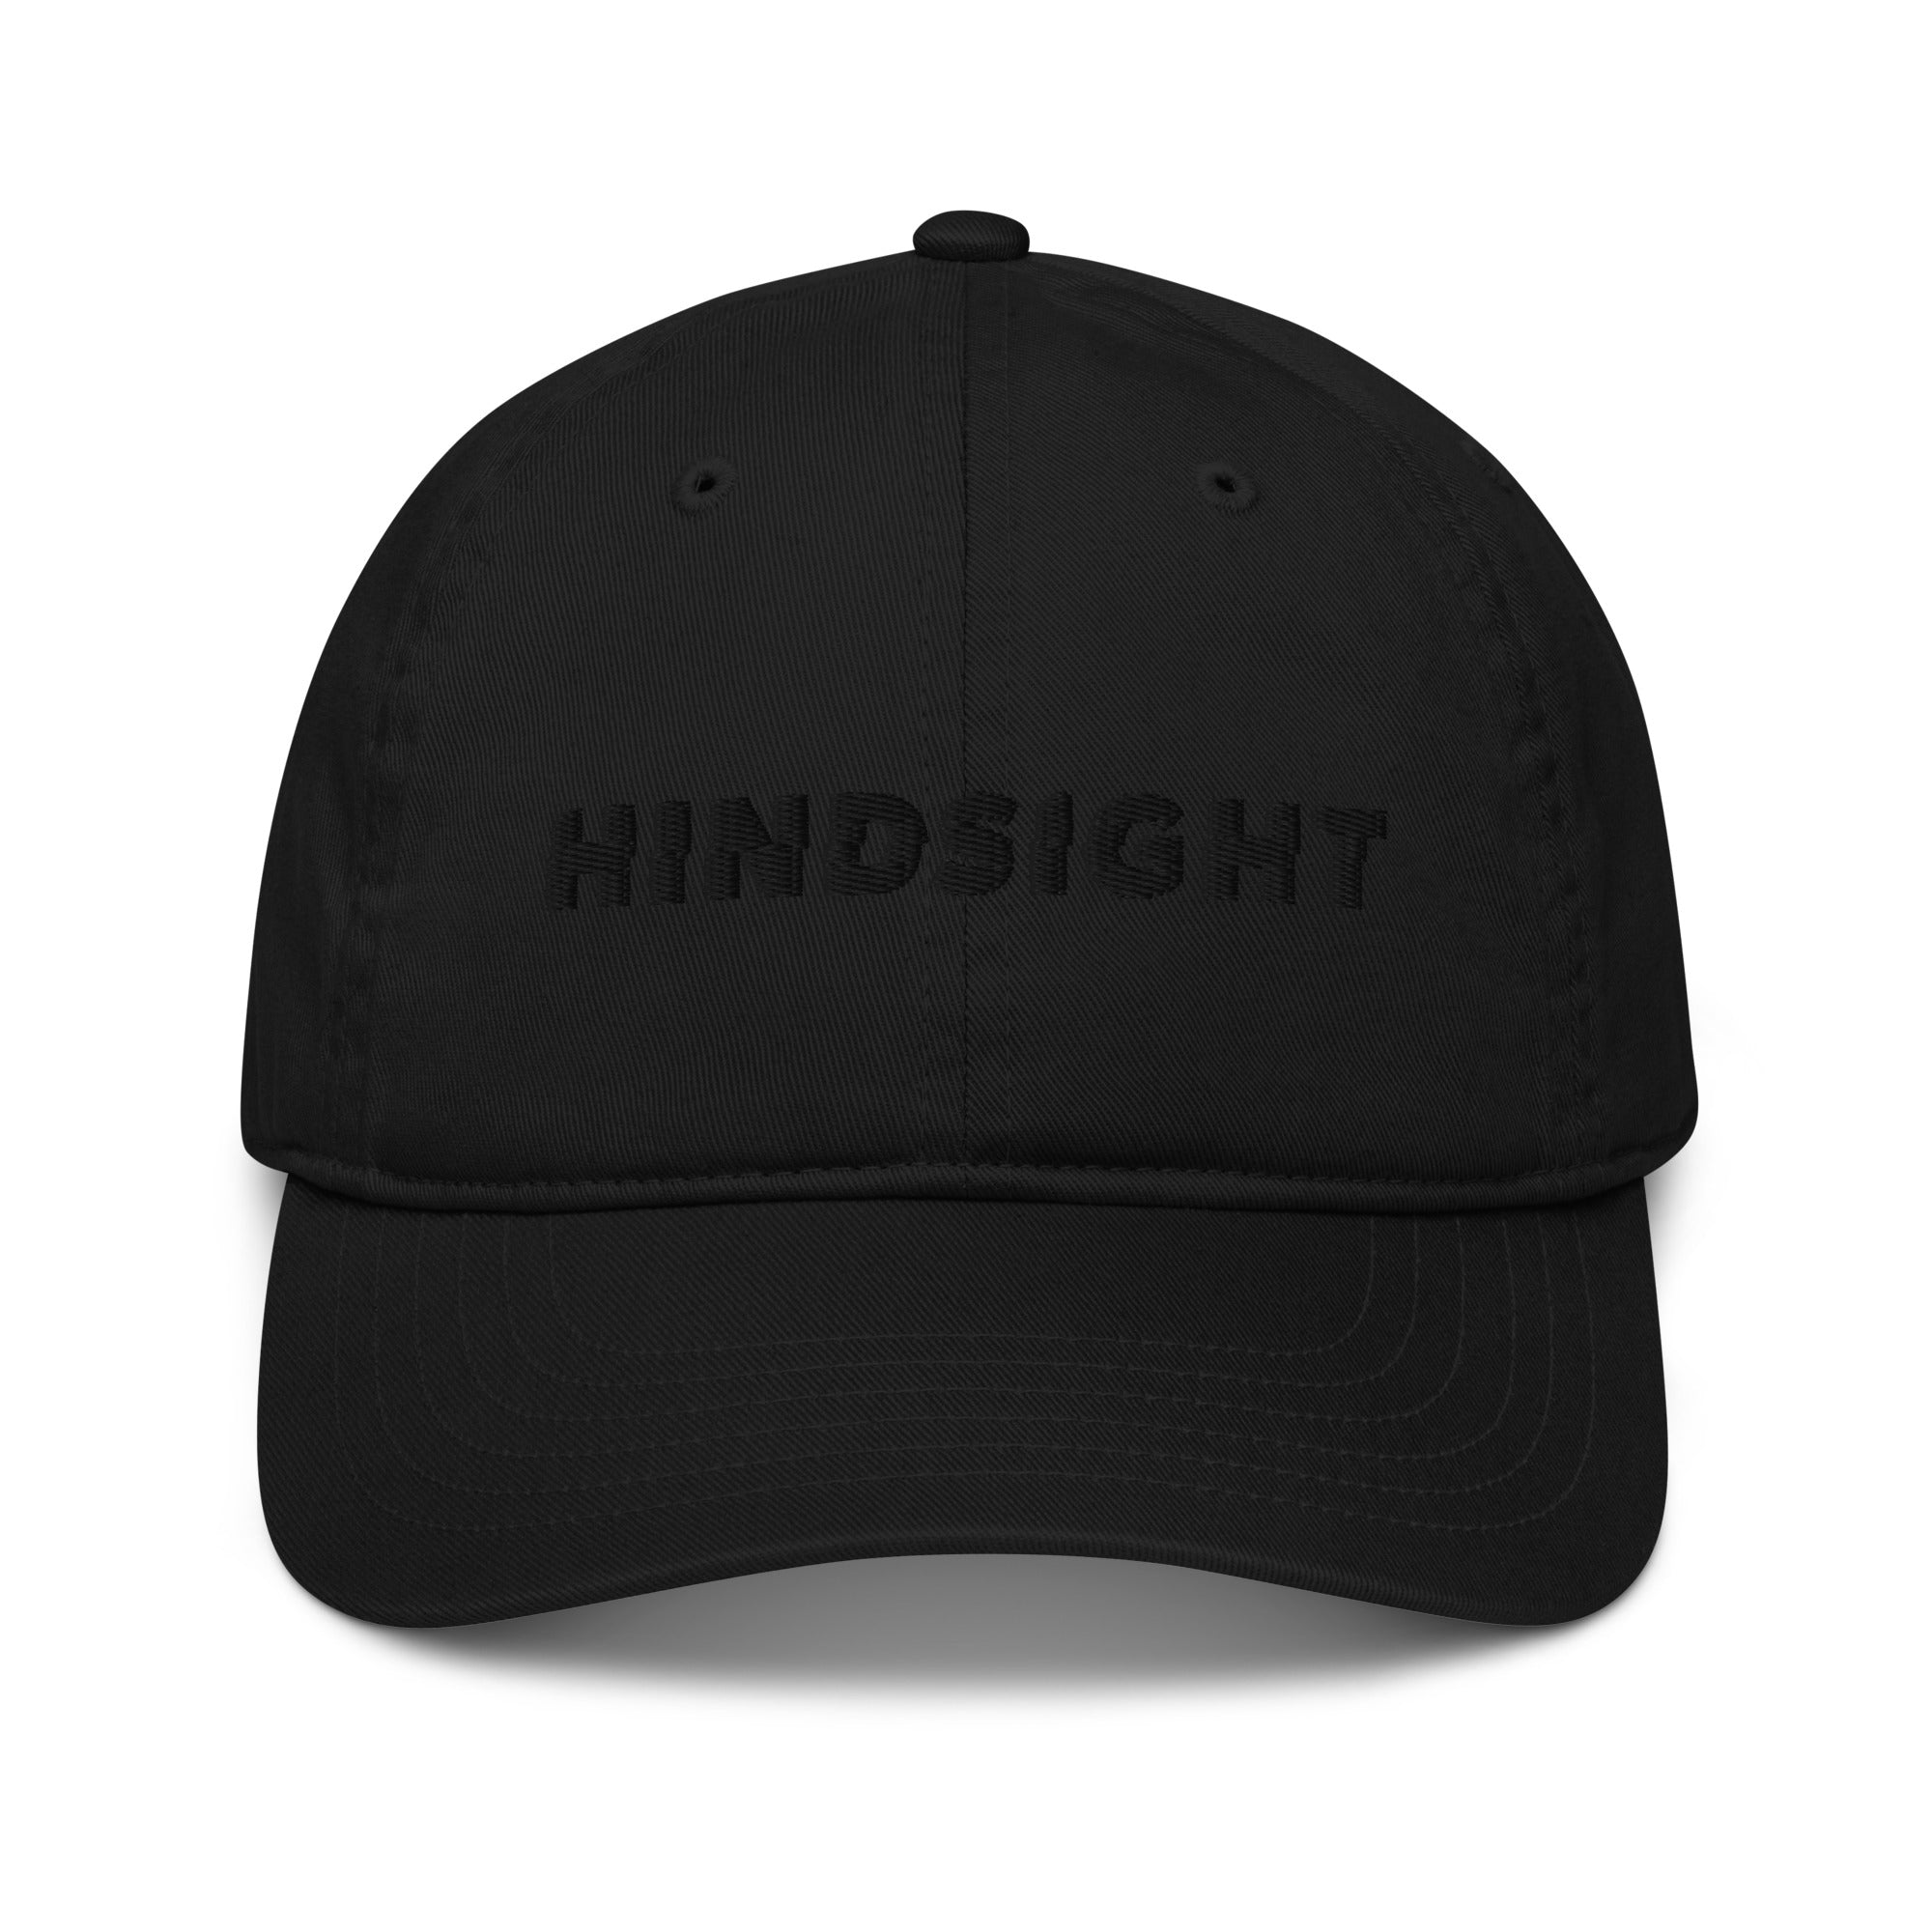 Organic HindSight hat - Black logo